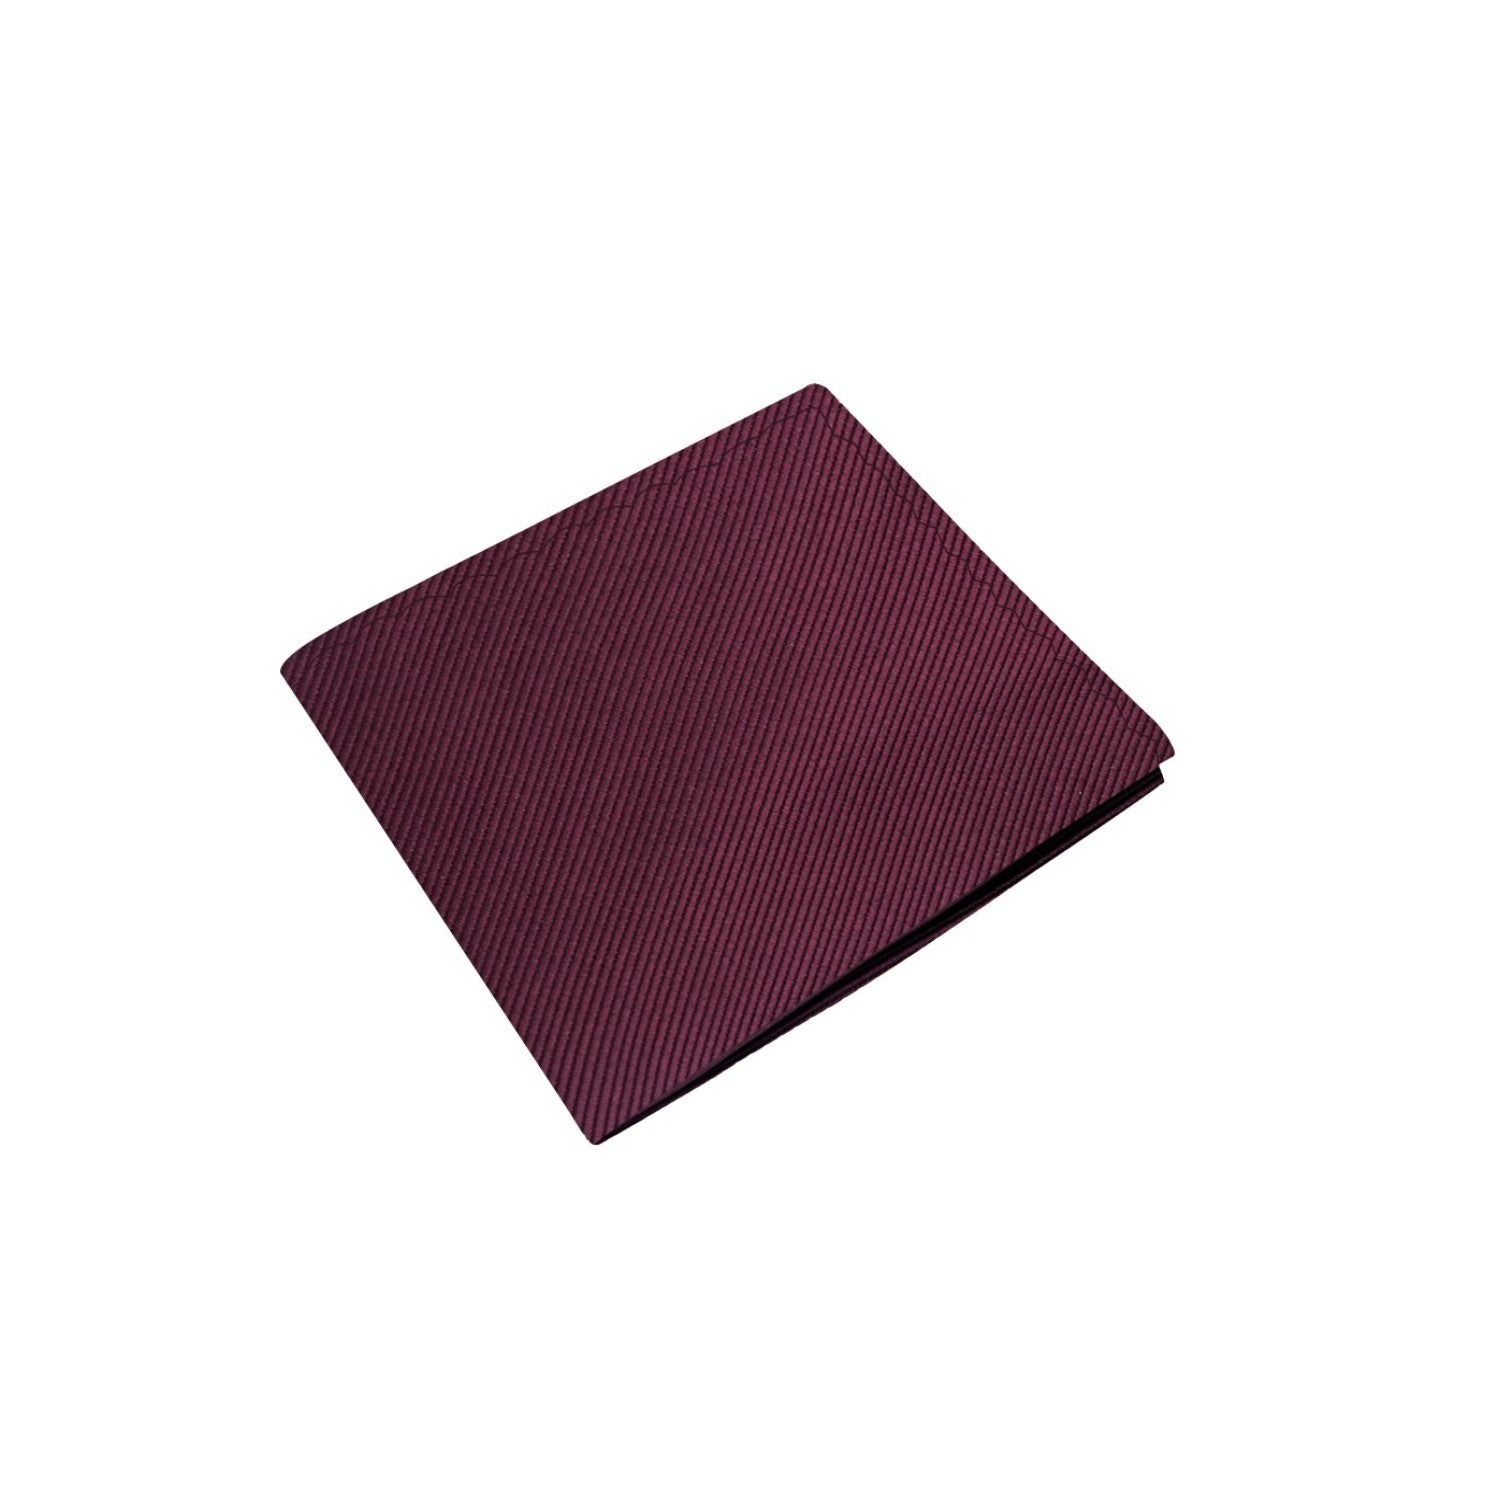 A Solid Burgundy Pattern Silk Pocket Square